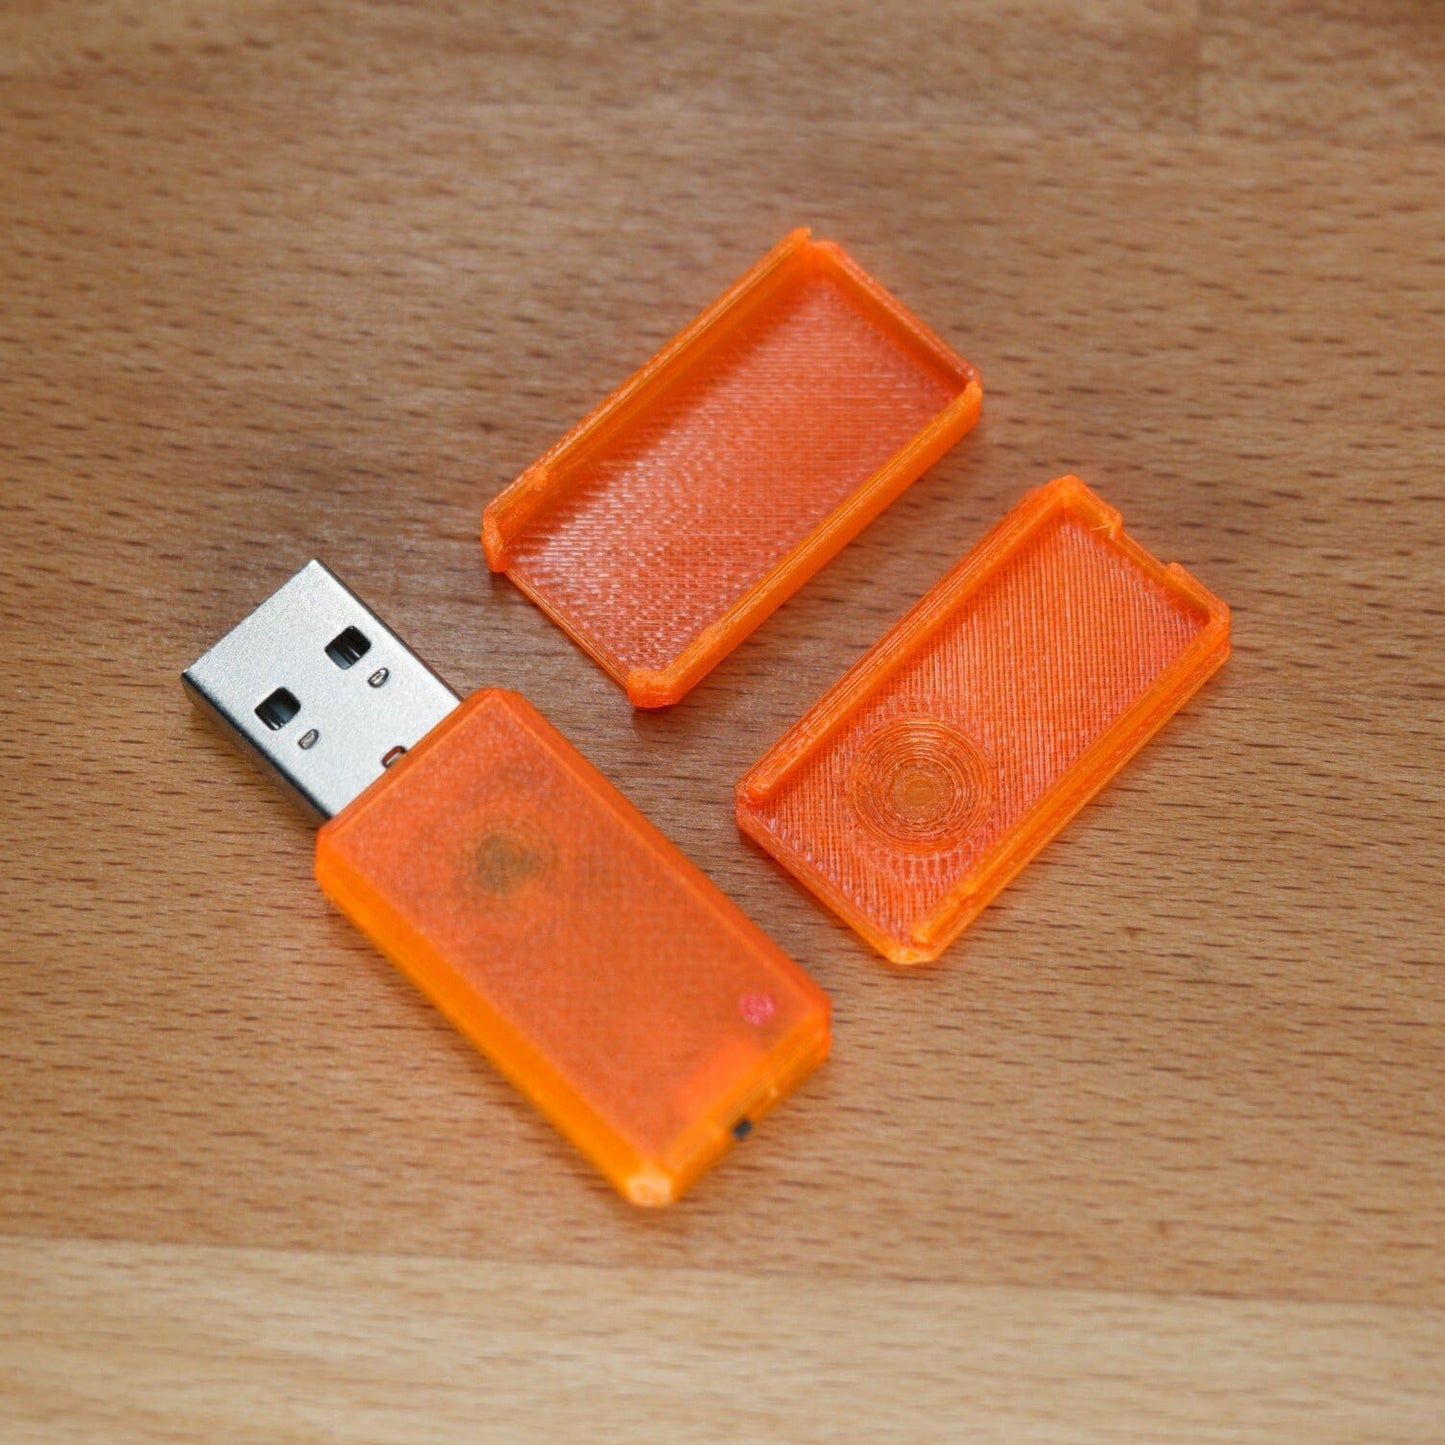 USB Nova with orange Case